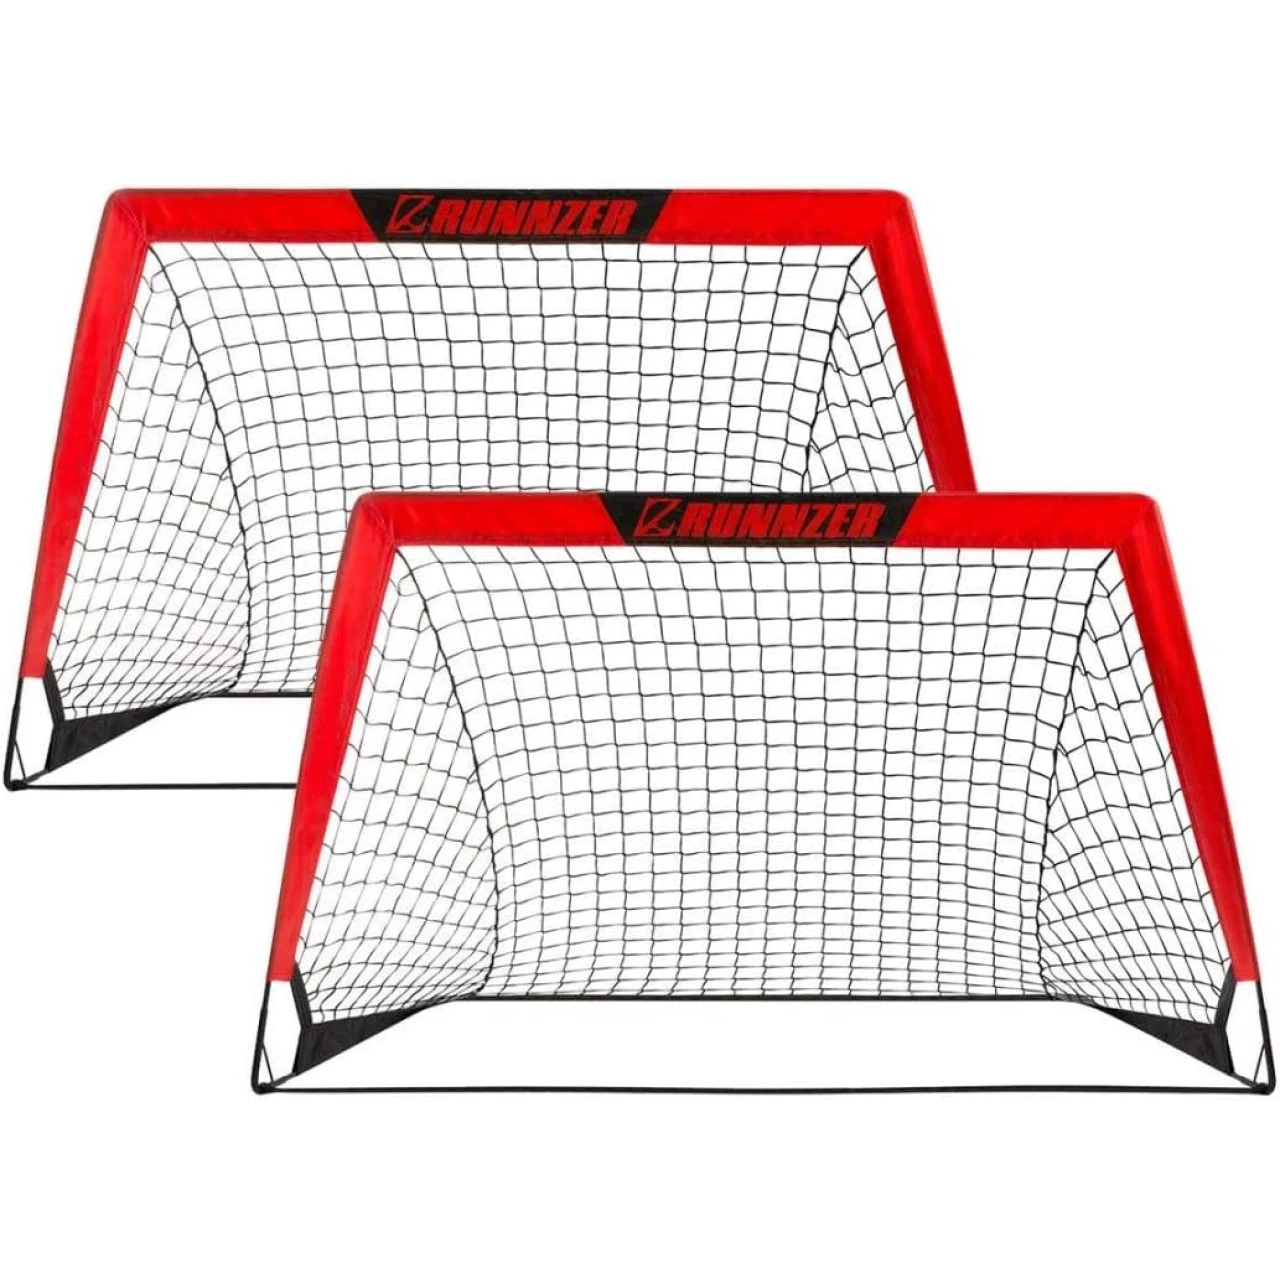 L RUNNZER Portable Soccer Goal, Pop Up Soccer Goal Net for Backyard, Set of 2 with Portable Carrying Case